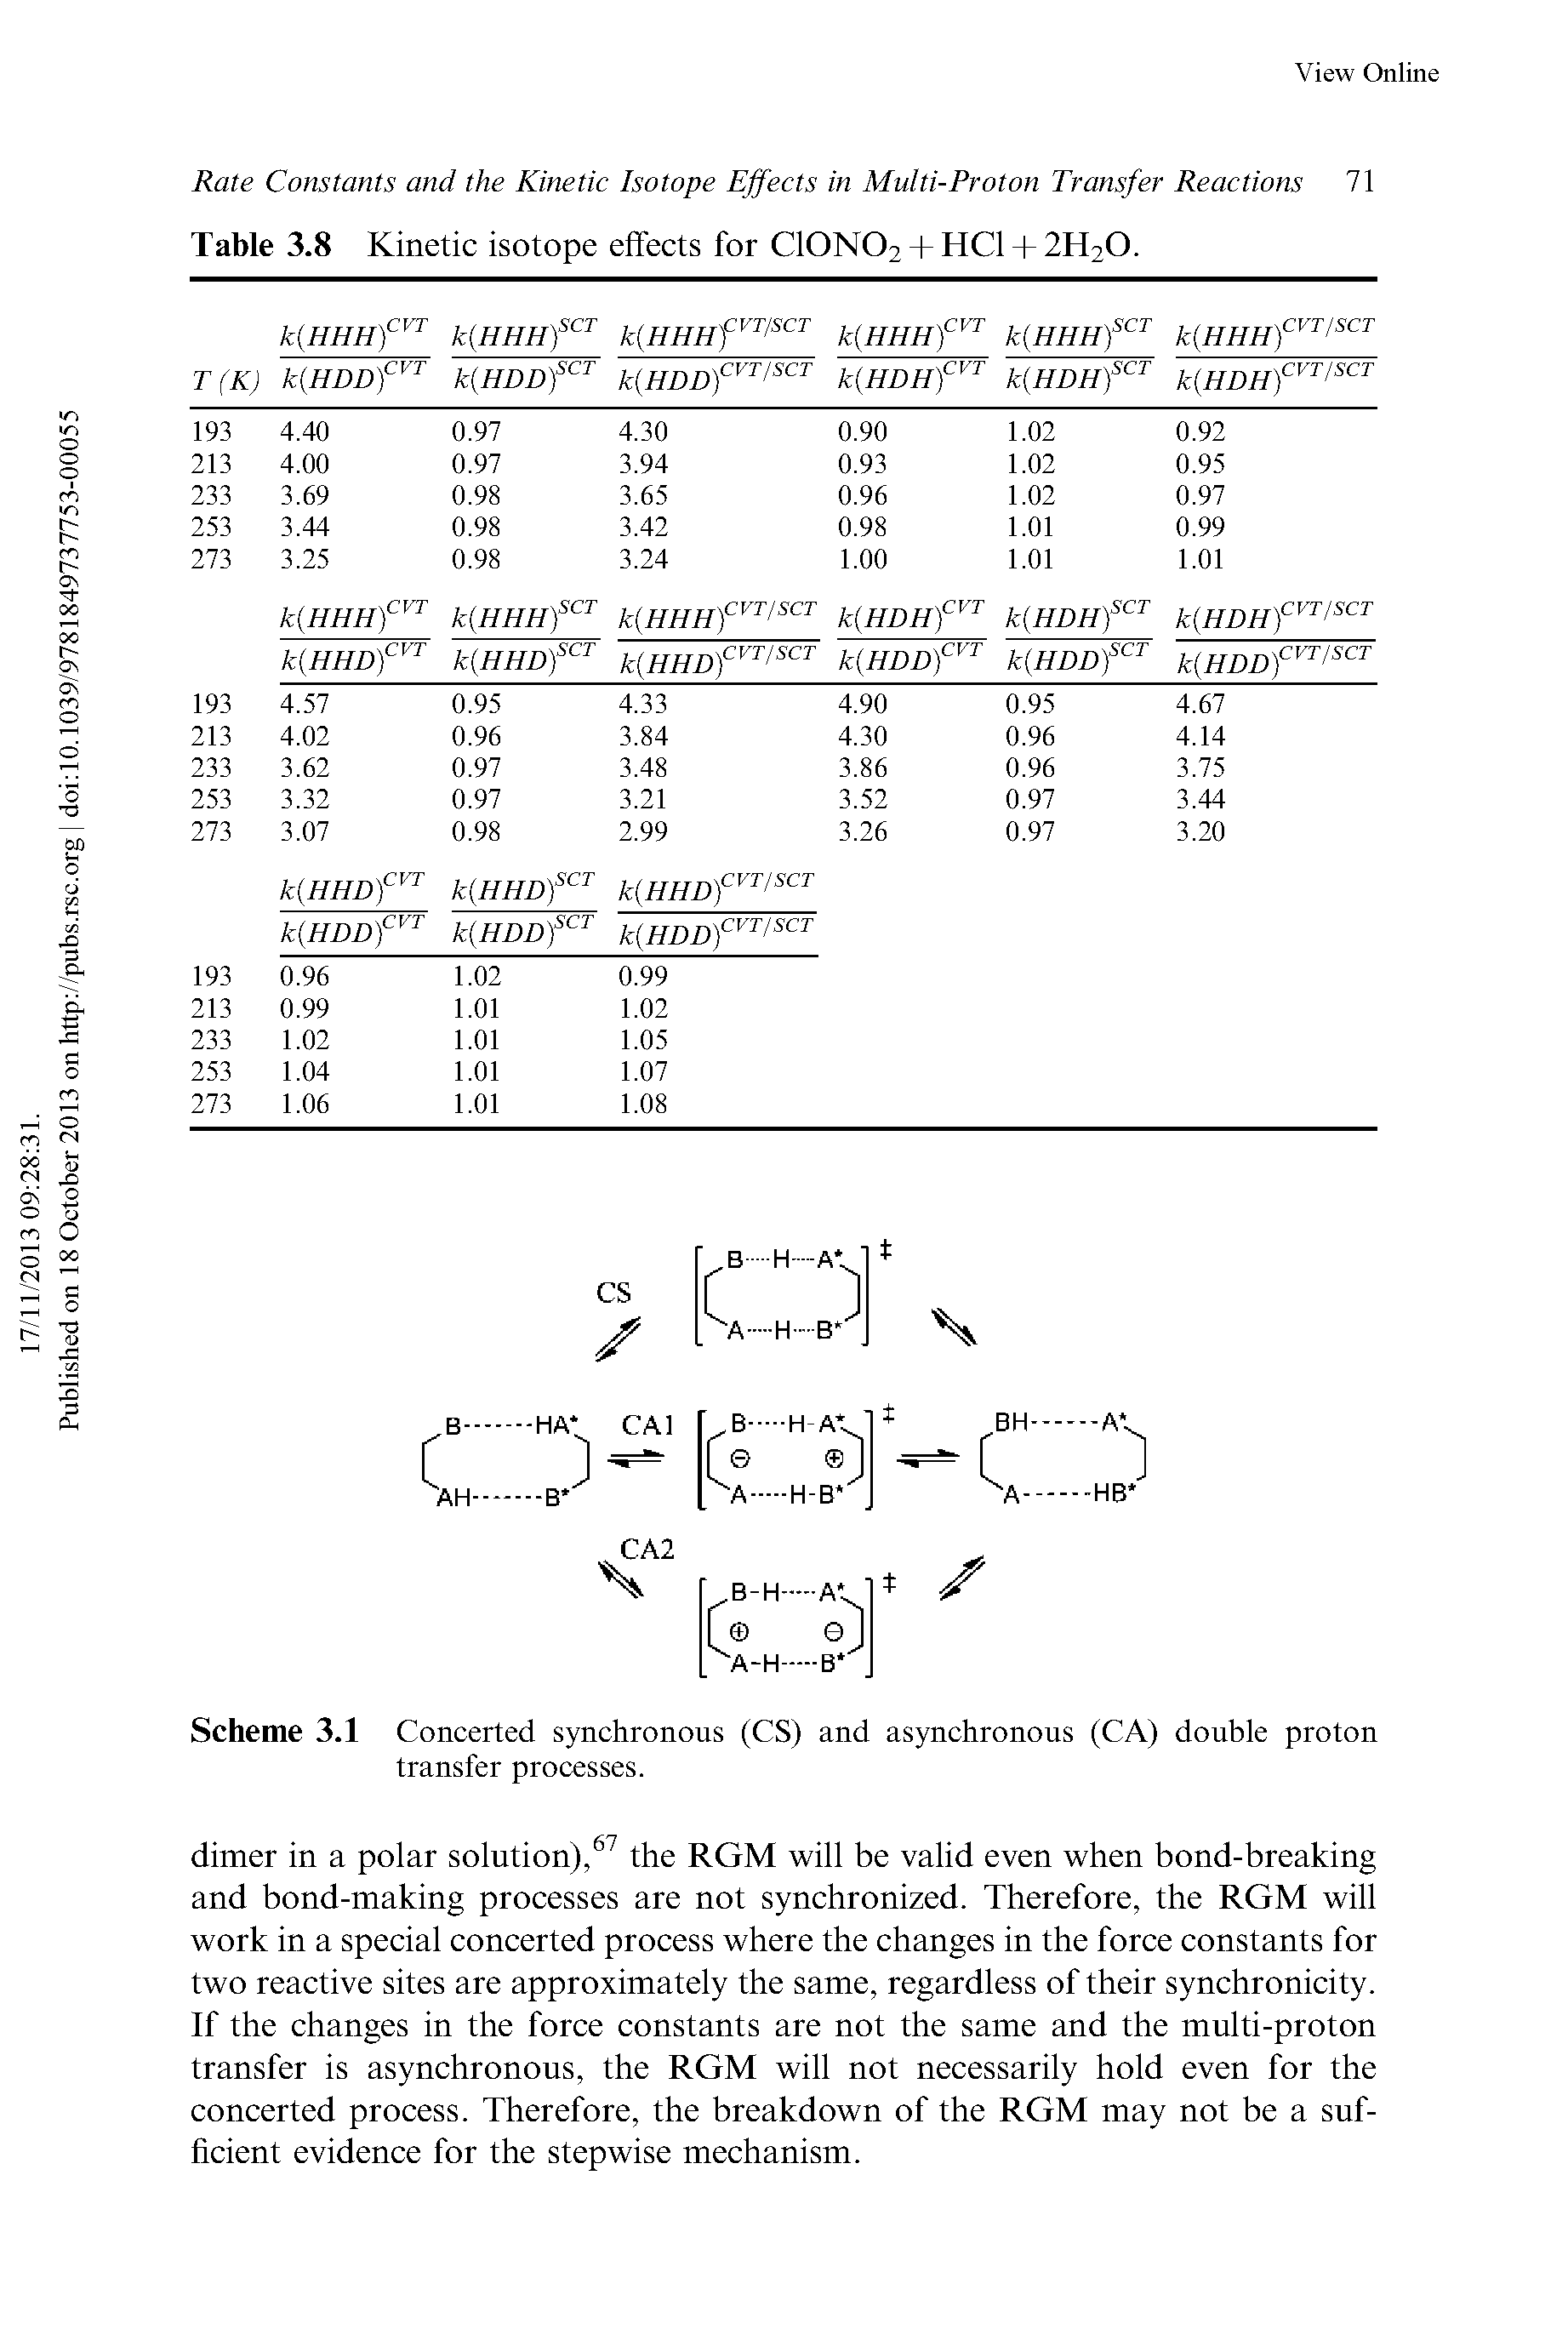 Scheme 3.1 Concerted synchronous (CS) and asynchronous (CA) double proton transfer processes.